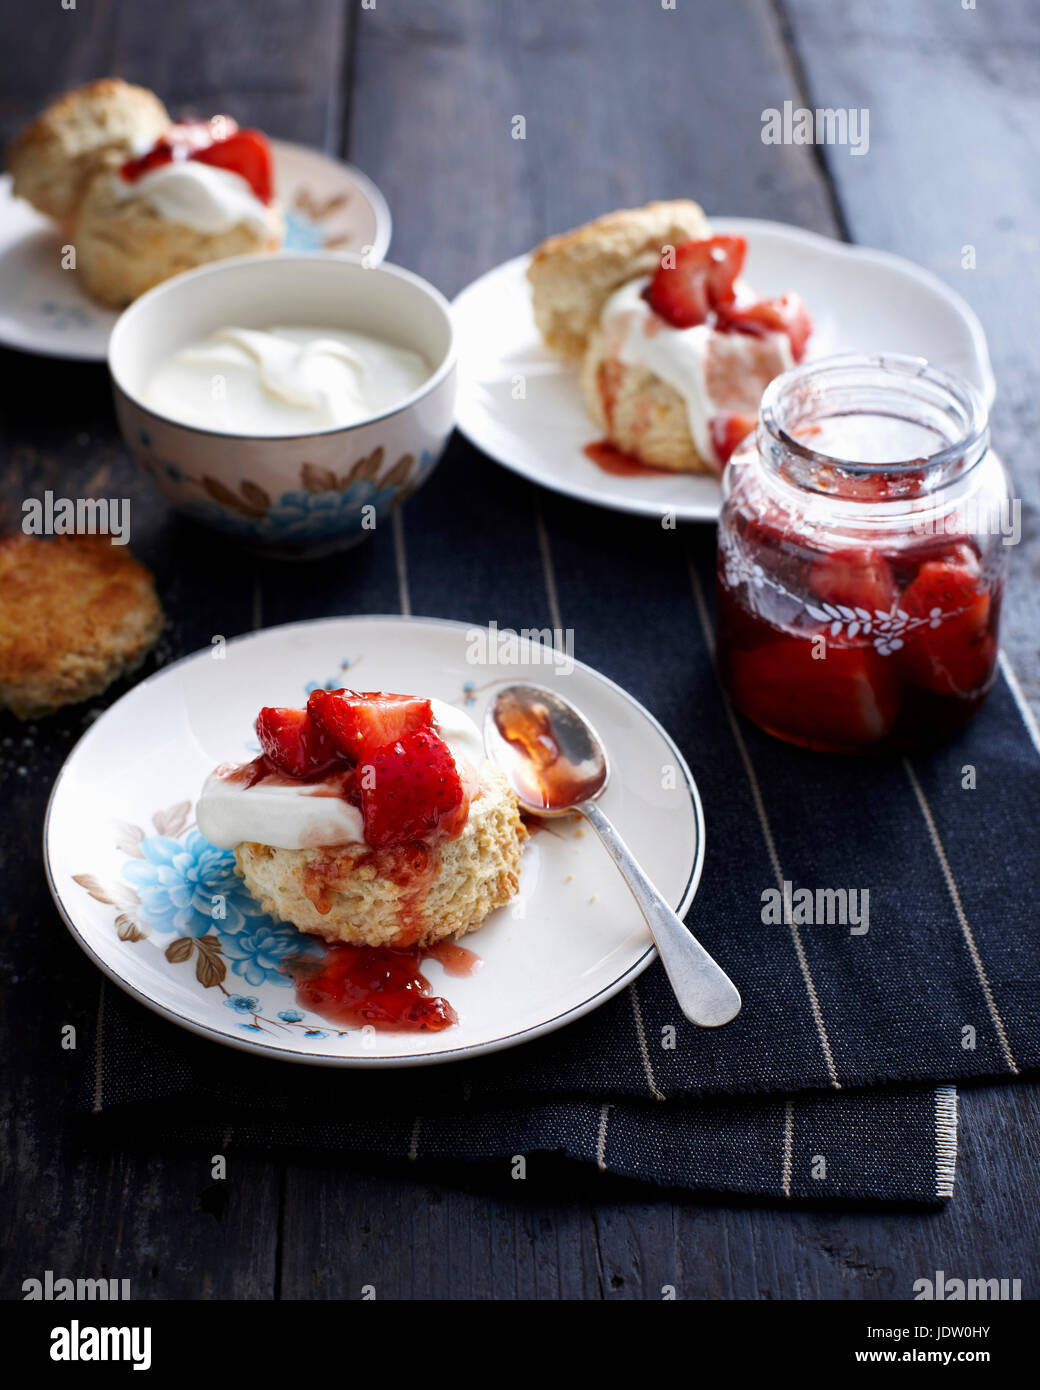 Plate of strawberry shortcake with cream Stock Photo